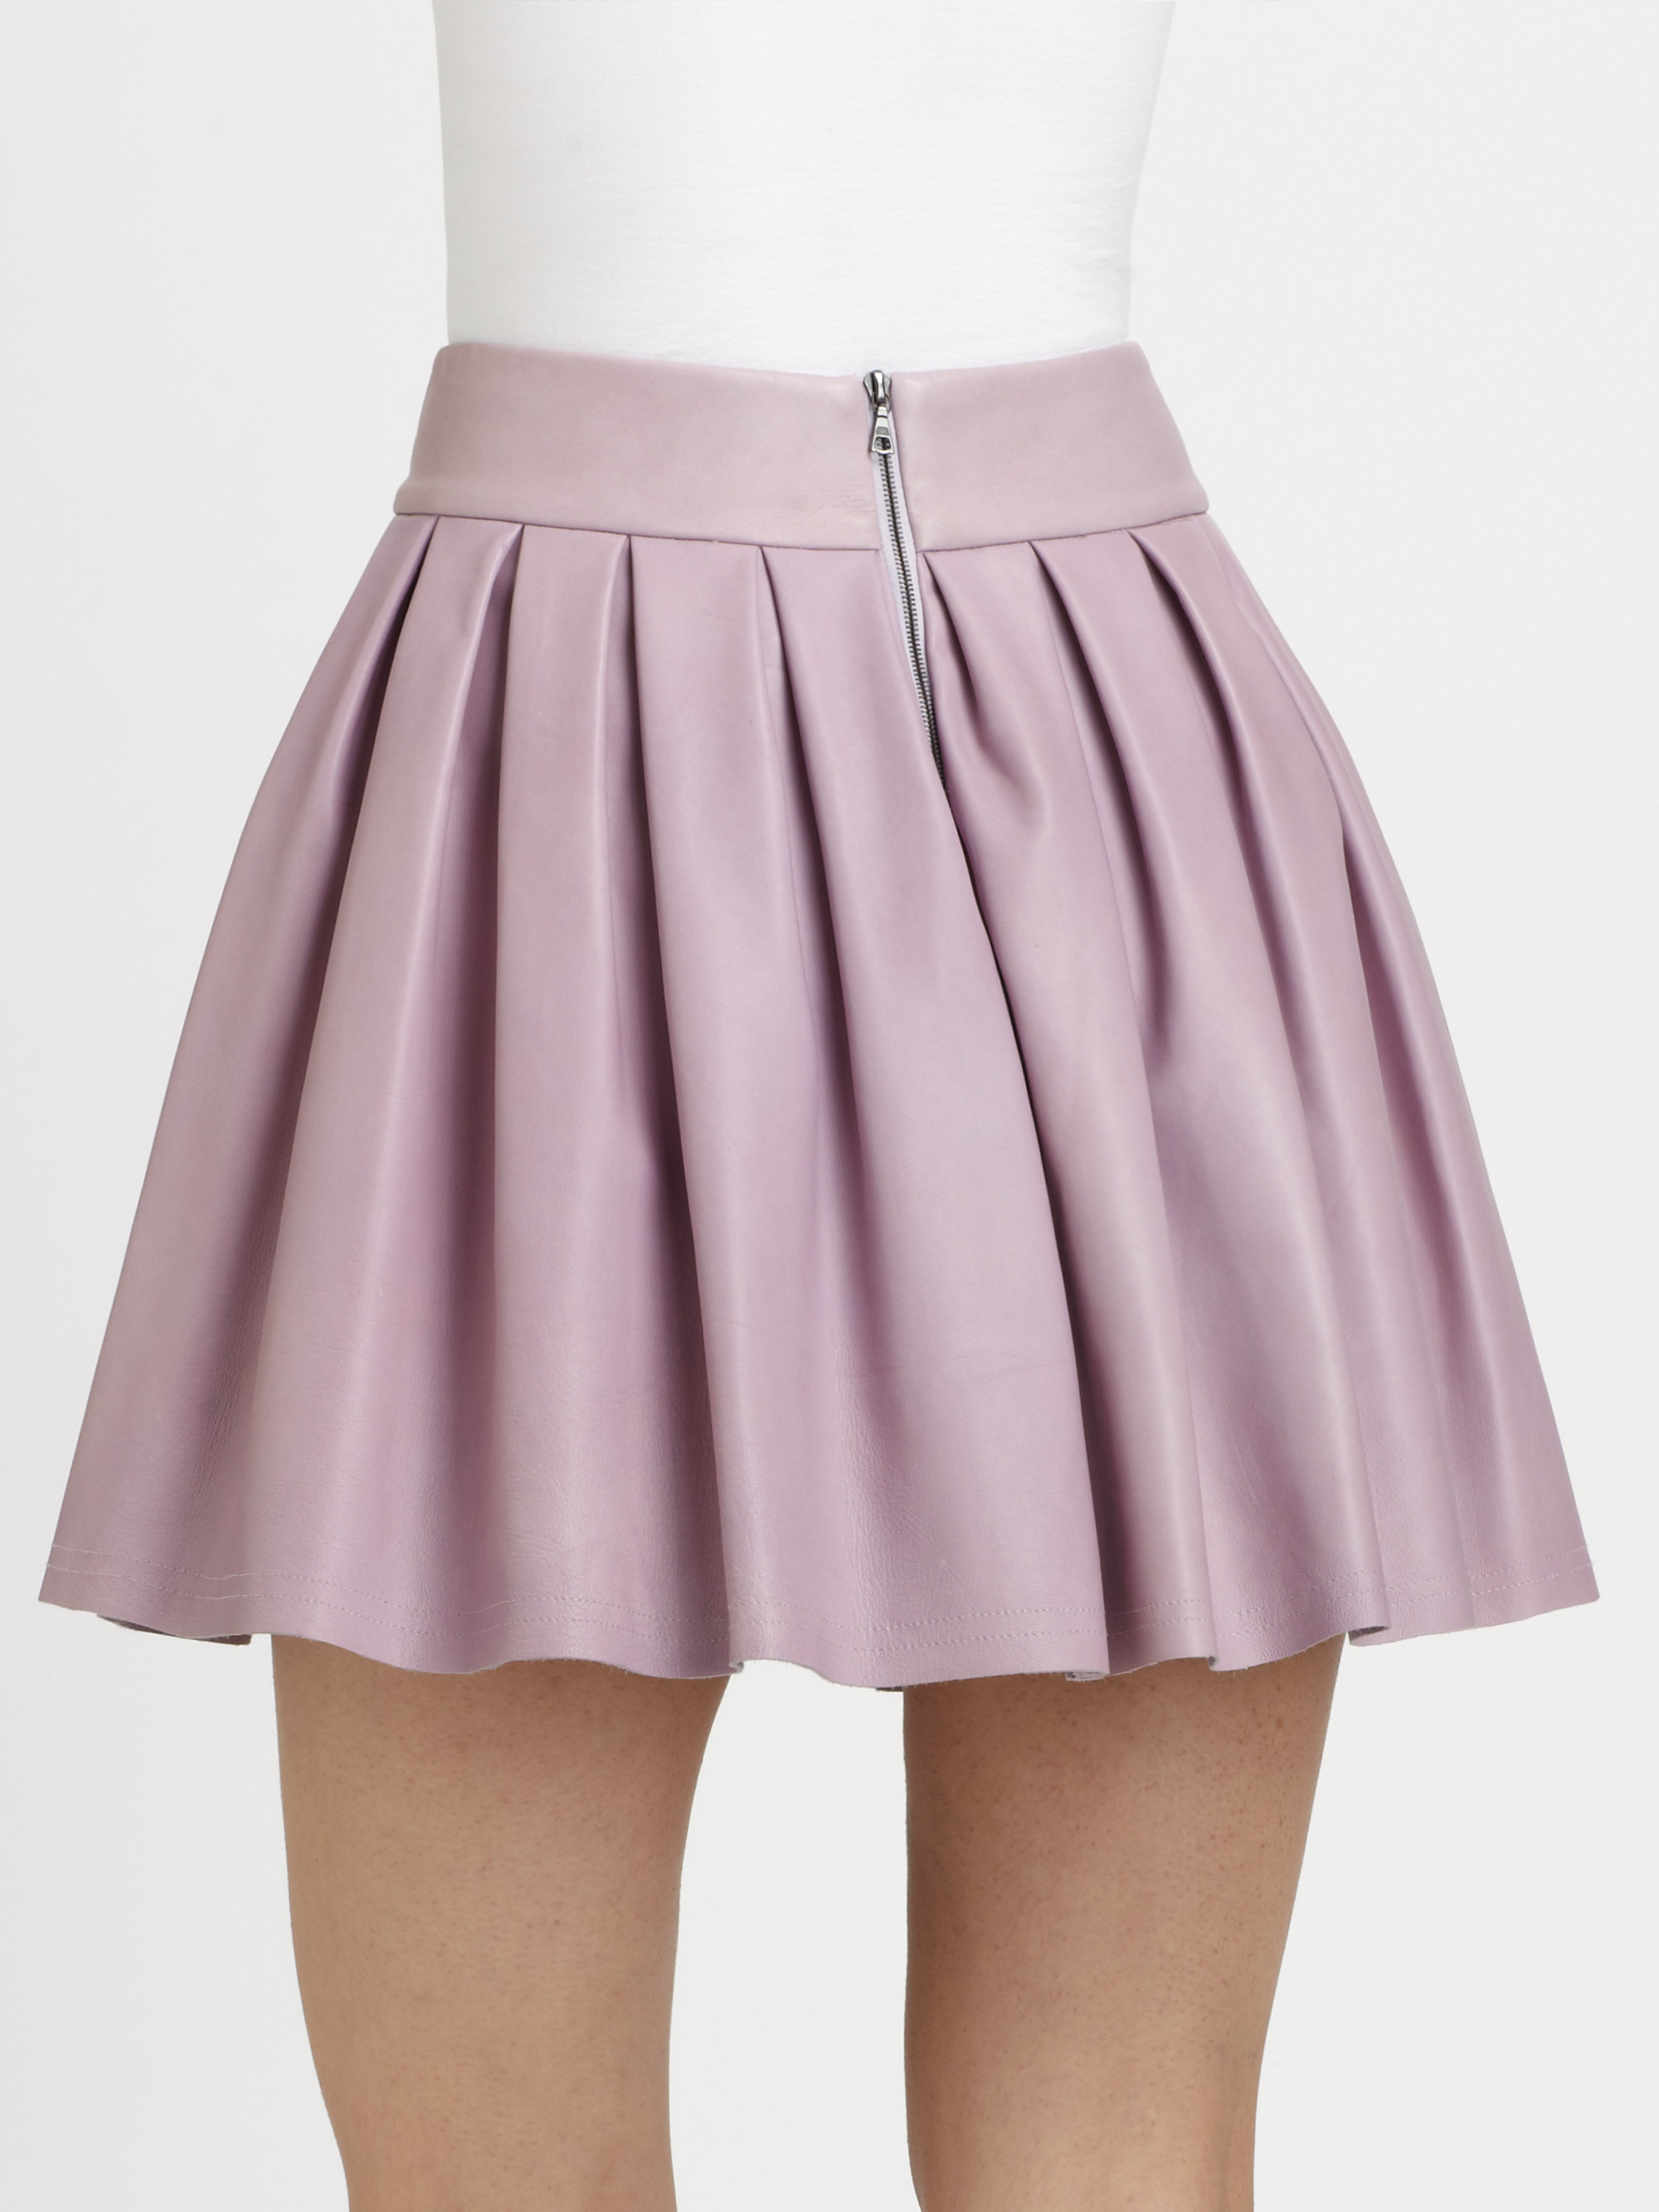 Alice + Olivia Box Pleat Leather Skirt in Light Purple (Purple) - Lyst